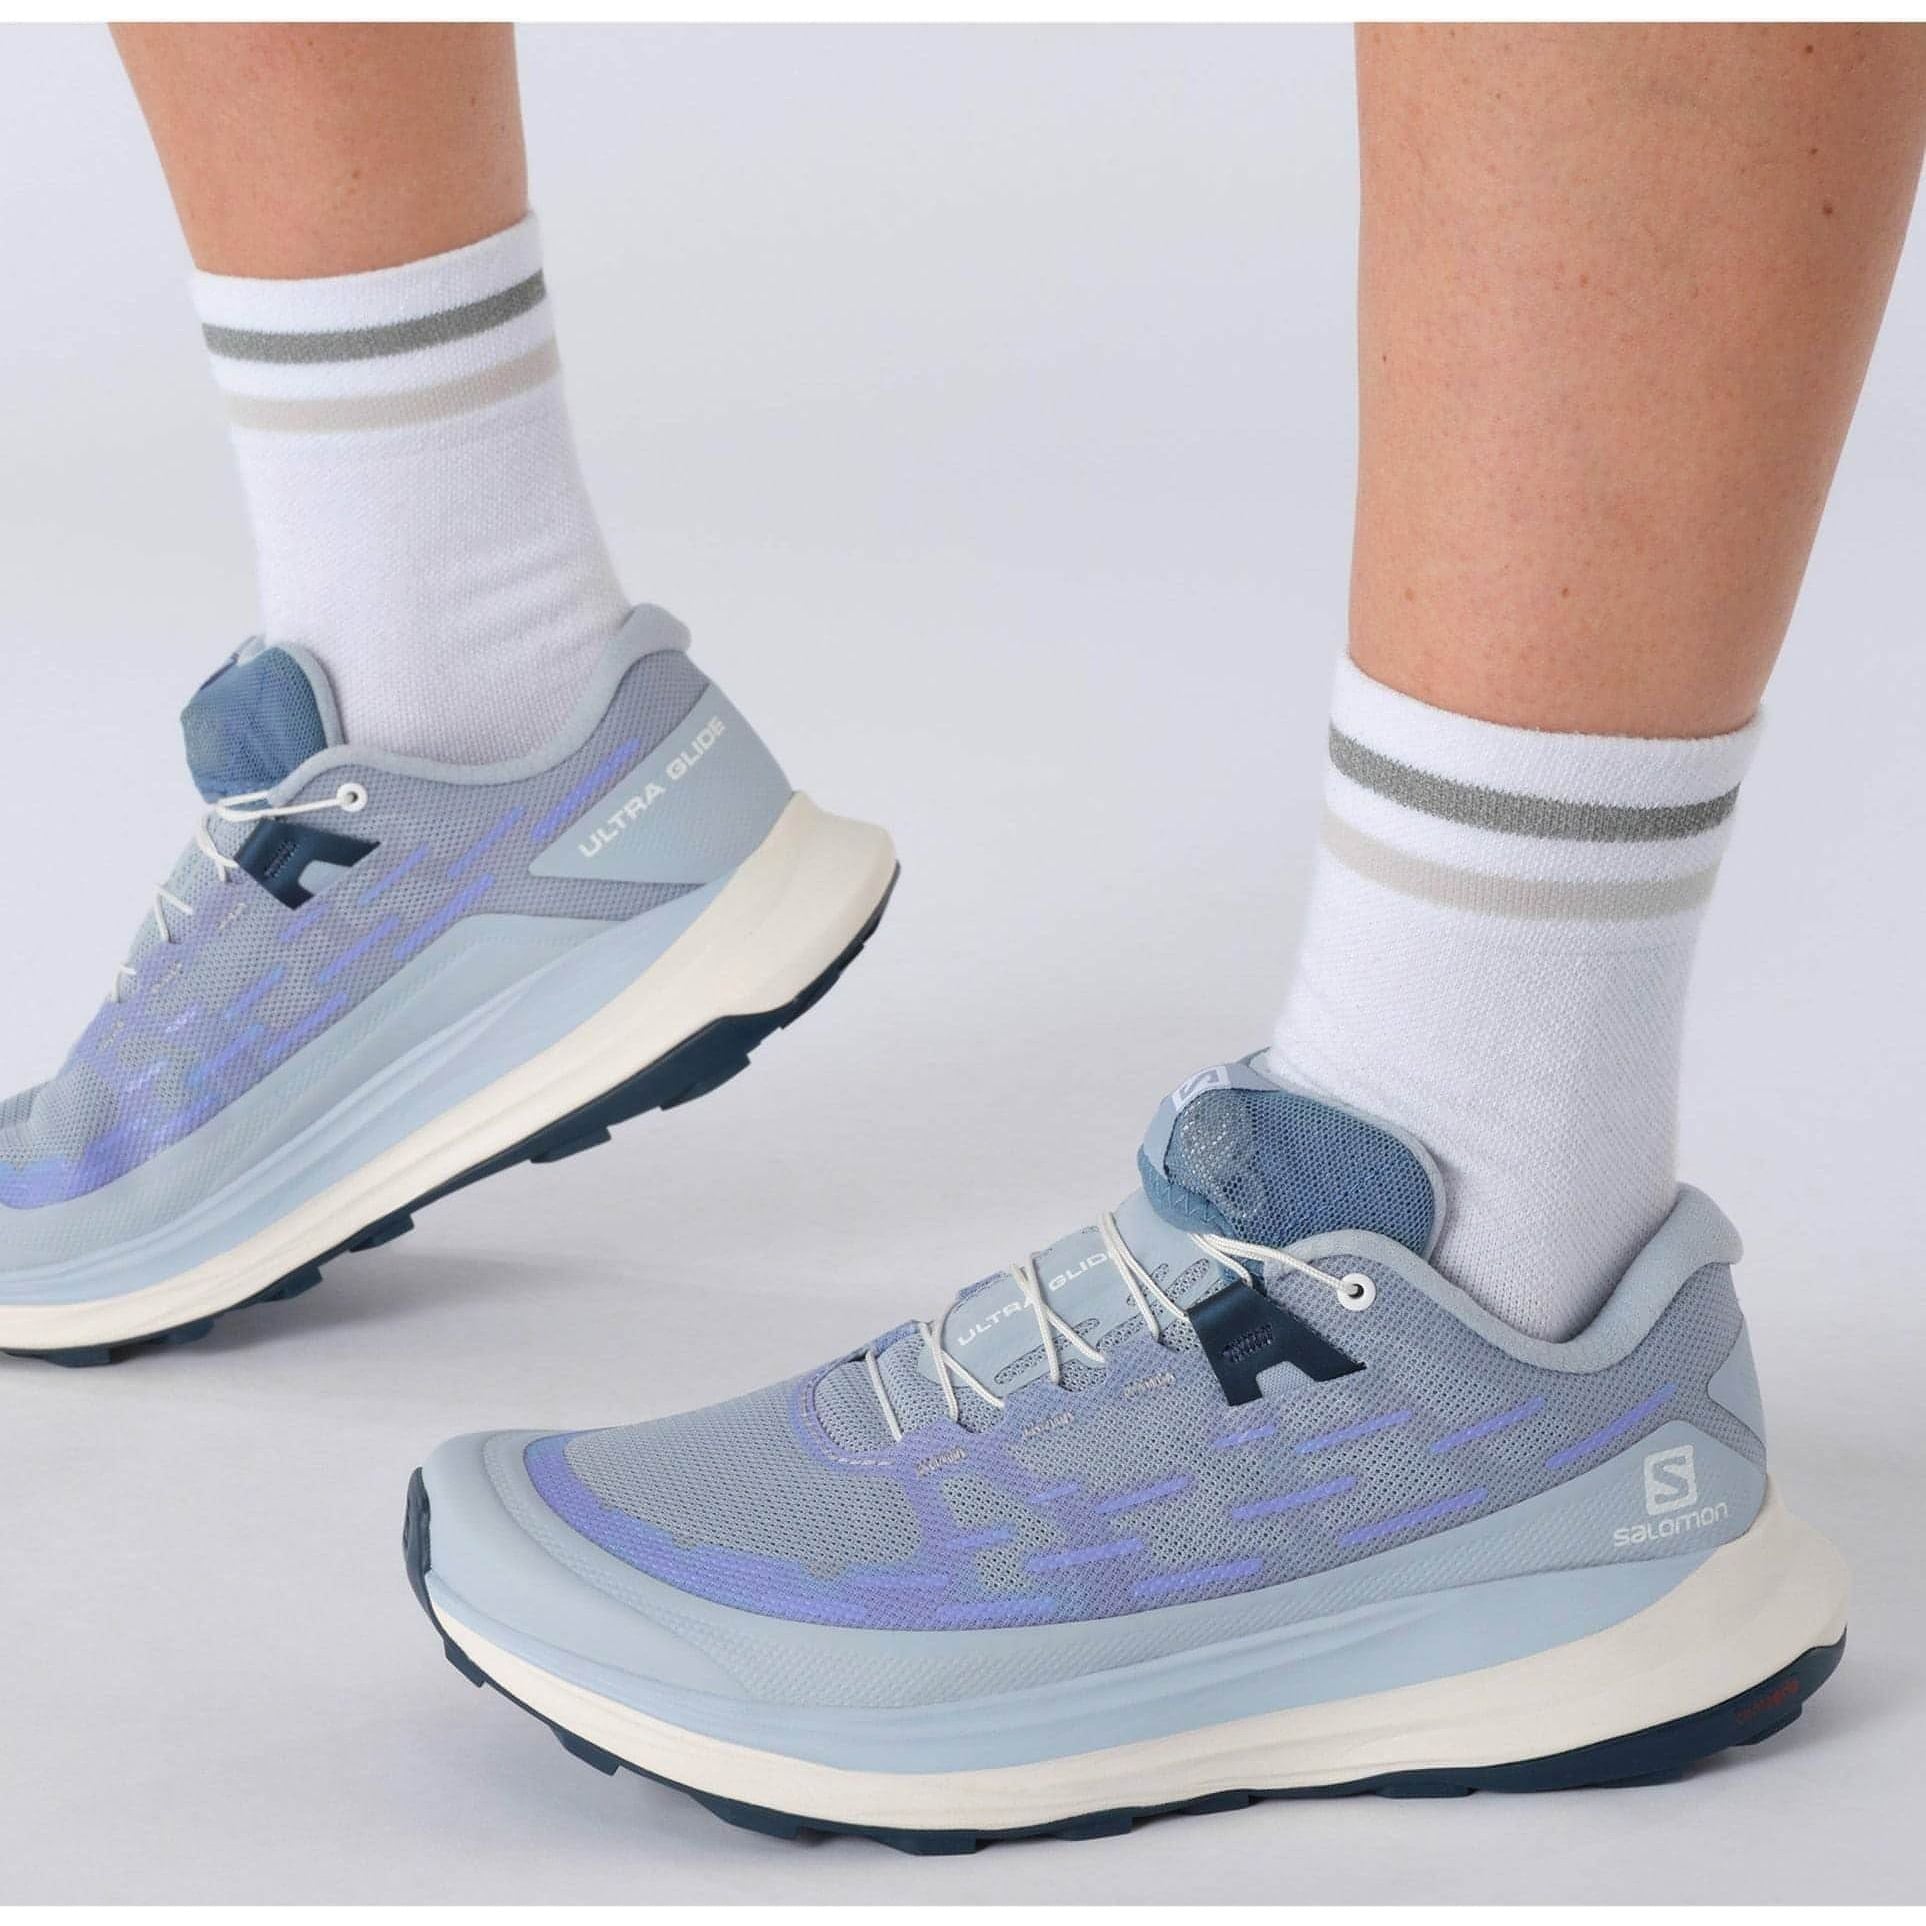 Salomon Ultra Glide Womens Trail Running Shoes - Blue - Start Fitness